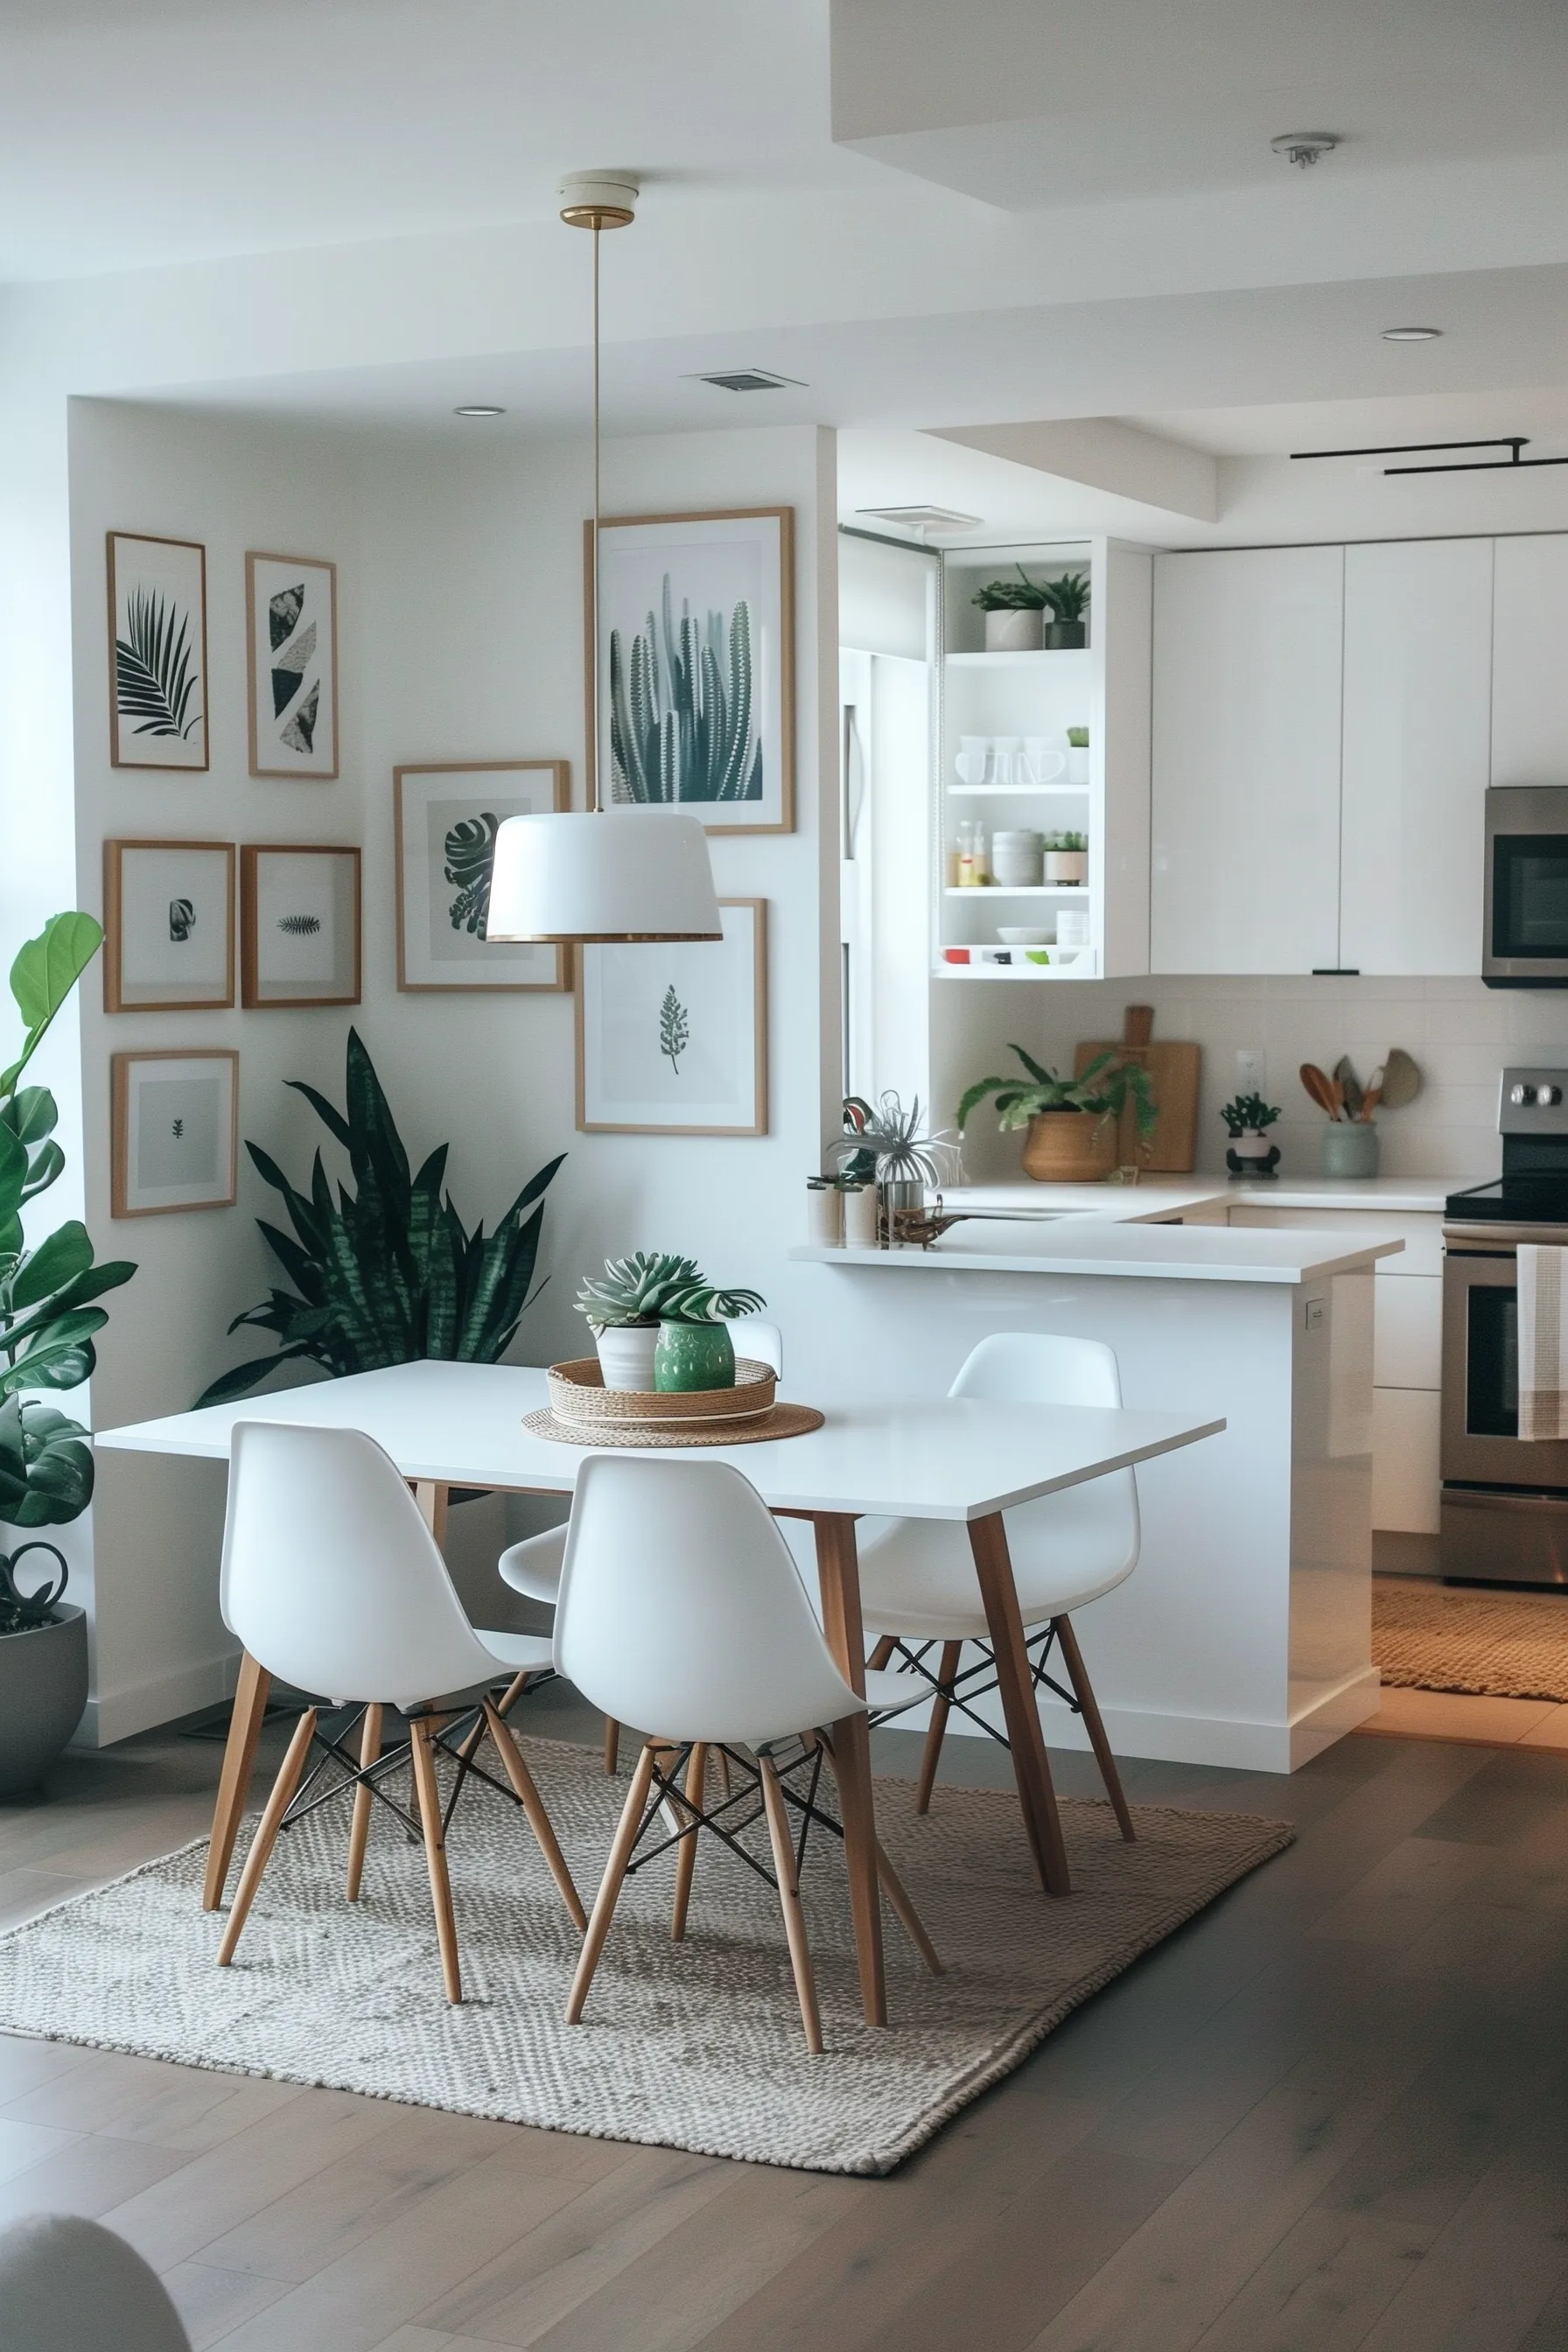 small kitchen living room design